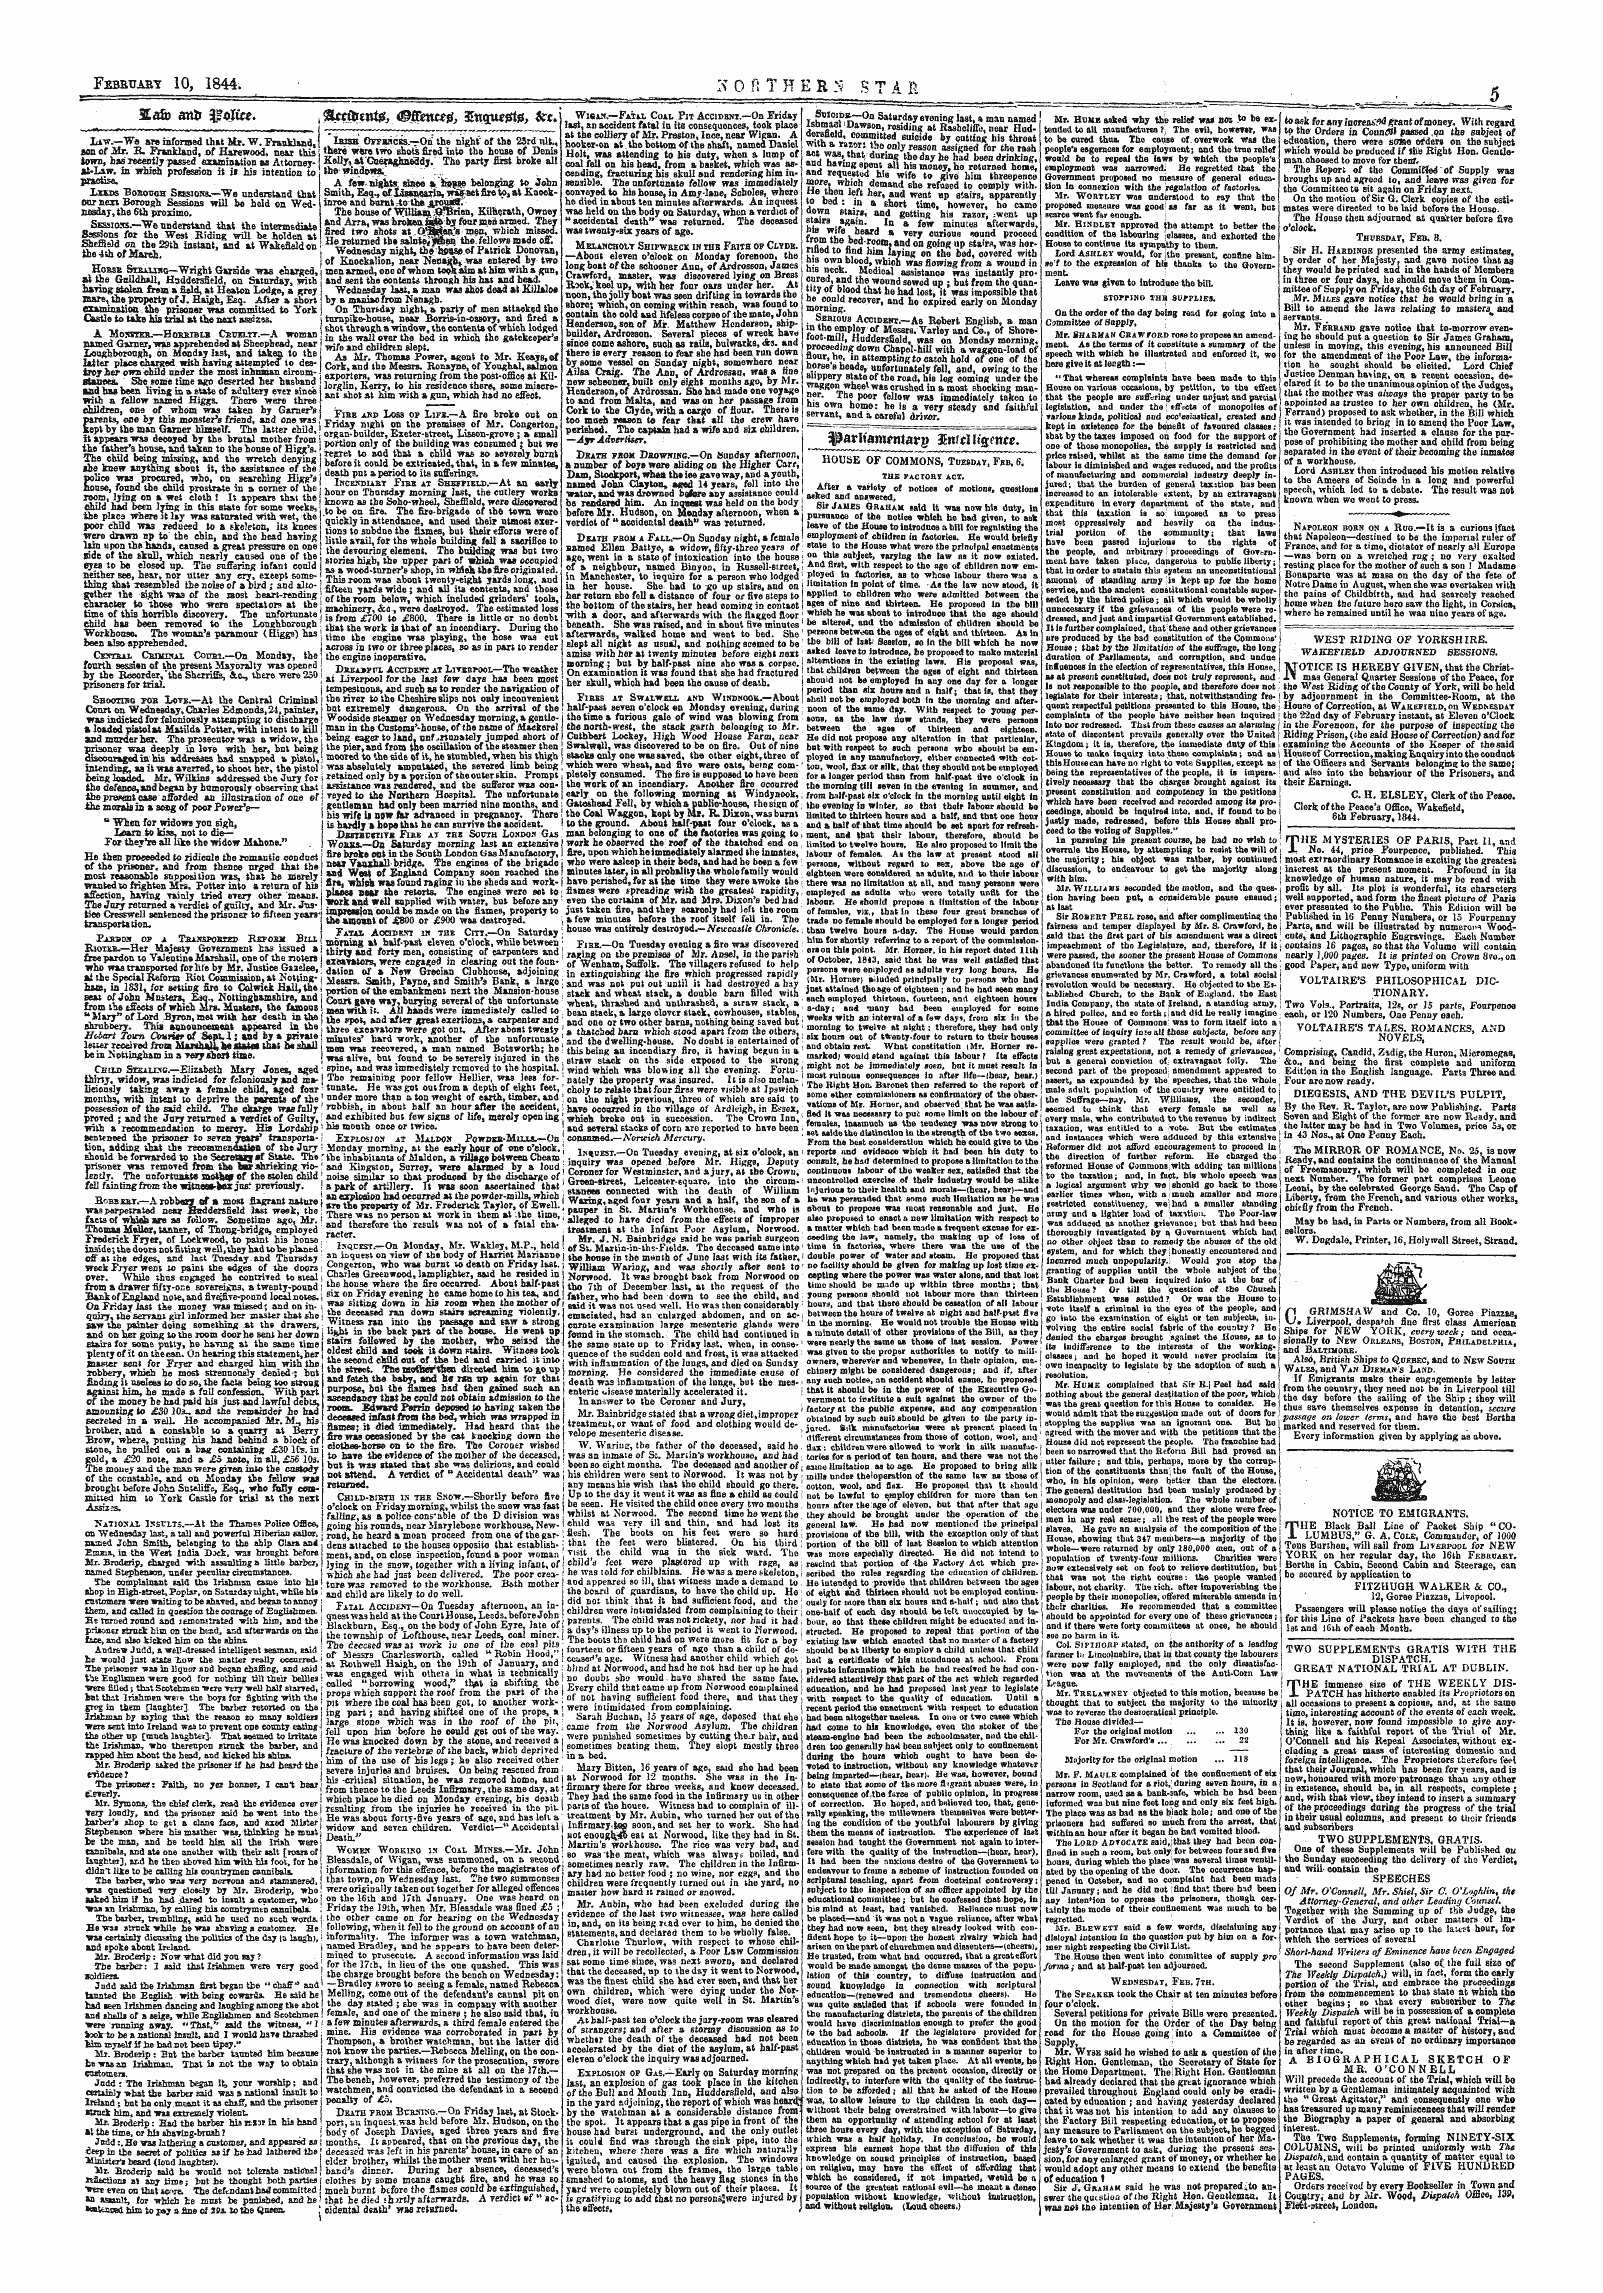 Northern Star (1837-1852): jS F Y, 1st edition - Parltam*Ttarg Siijifhfgmtt.